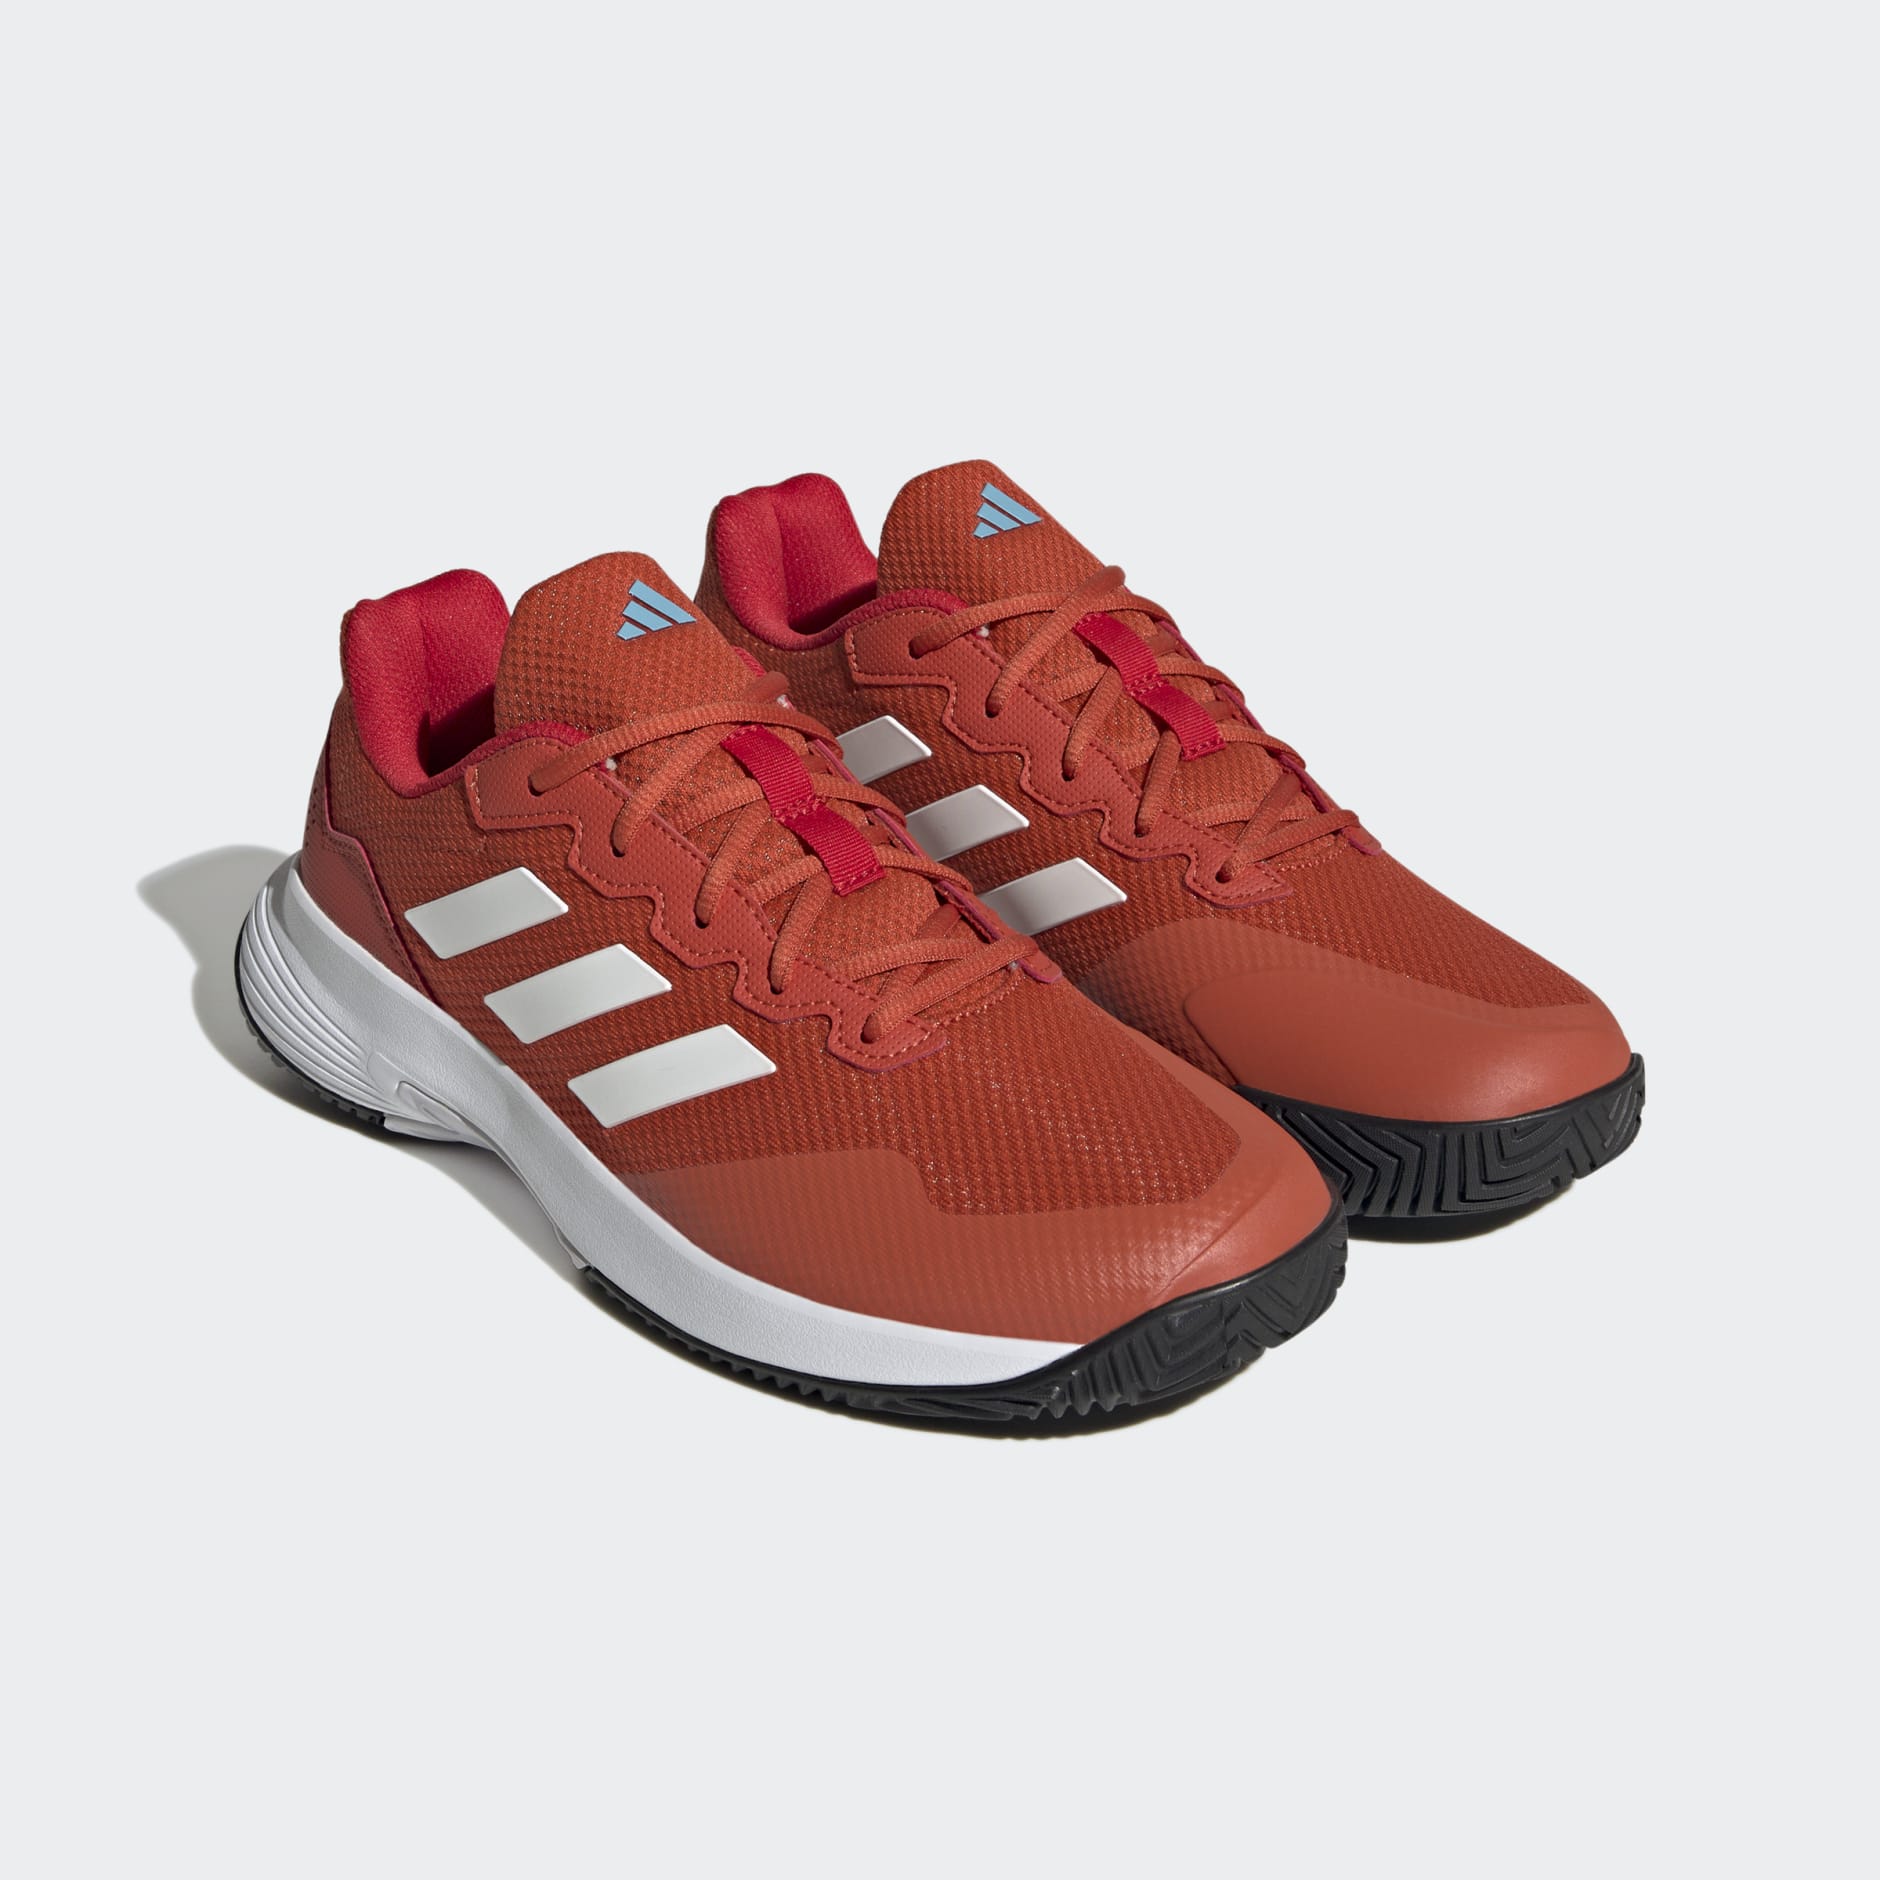 Adidas Gamecourt 2.0 Tennis Shoes for Men